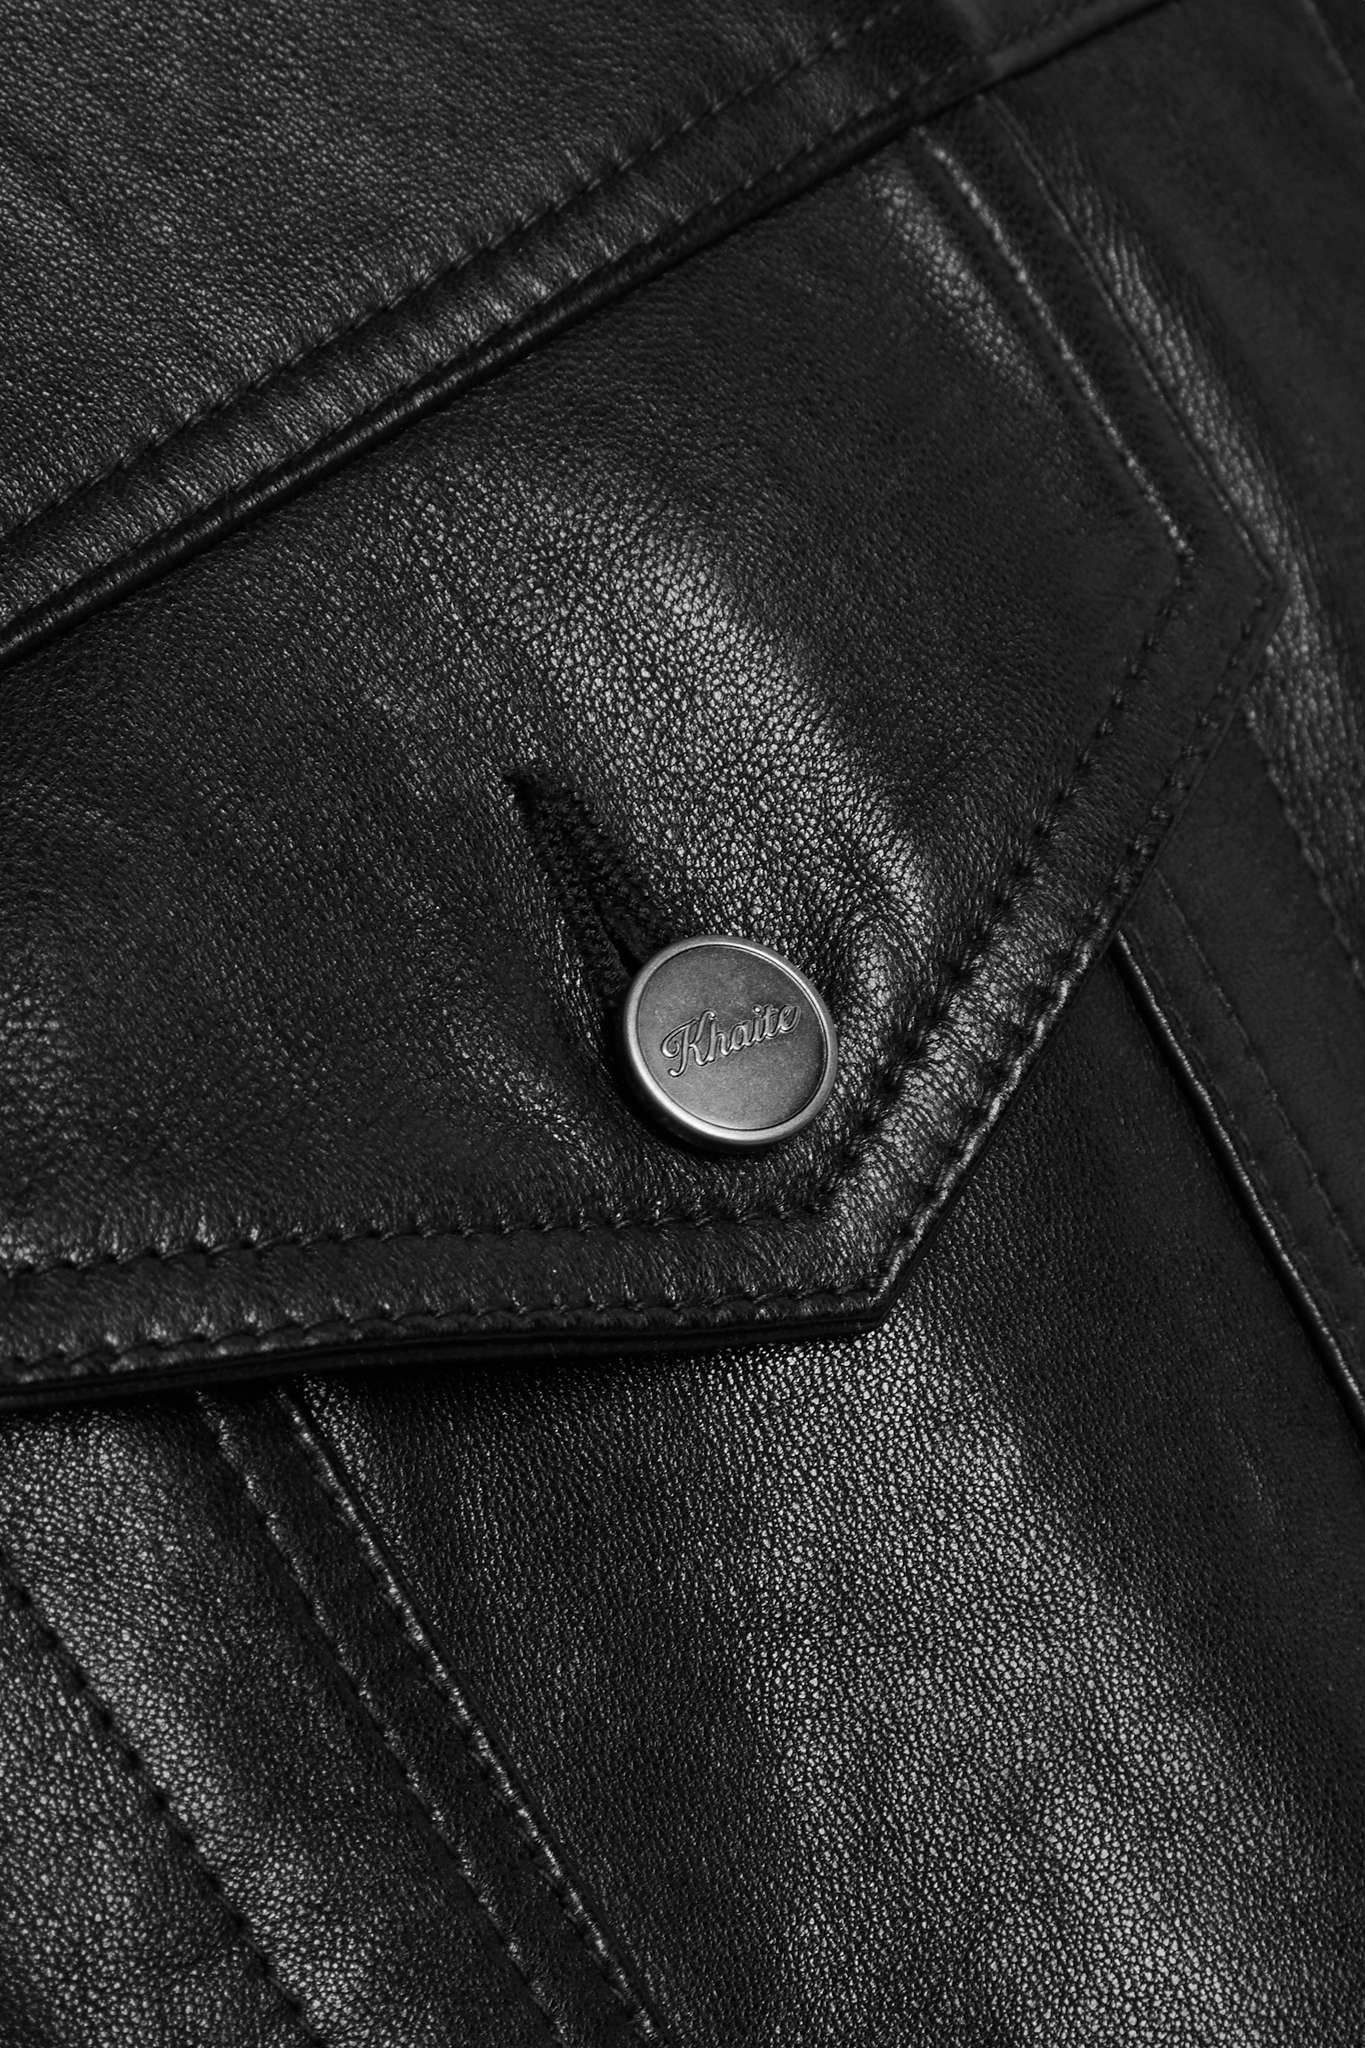 Grizzo oversized leather jacket - 5